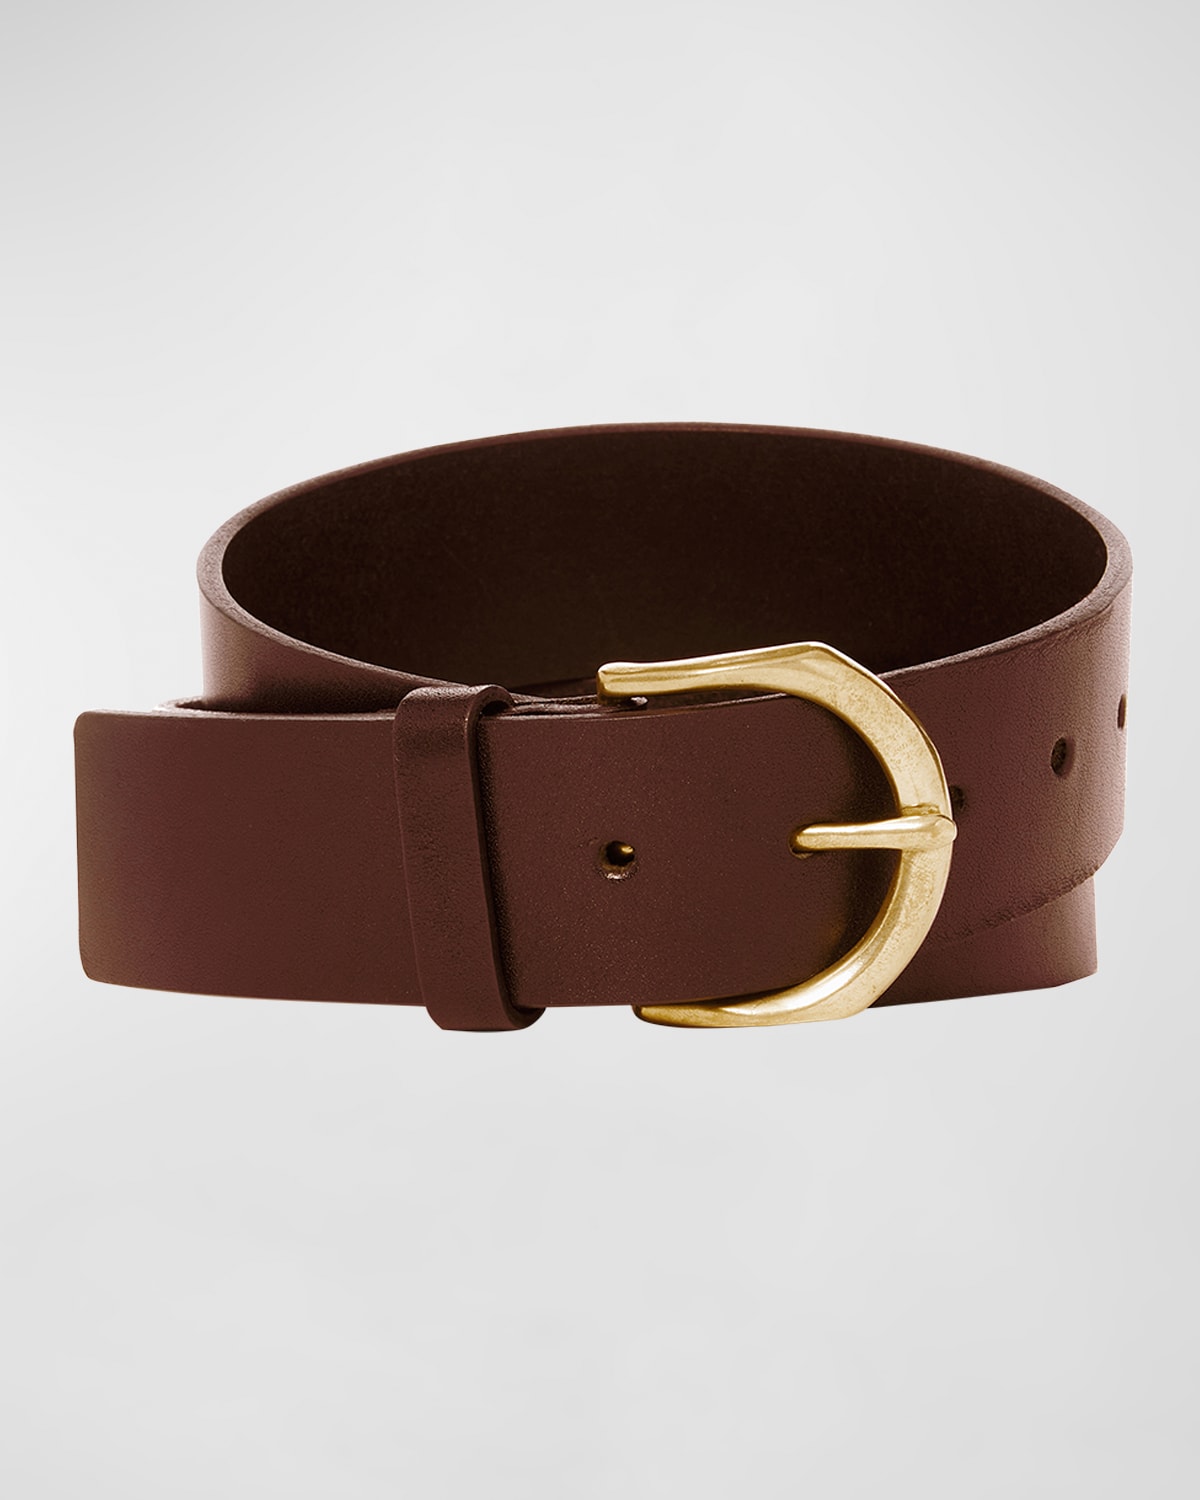 Janessa Leone Golden Buckle Leather Belt